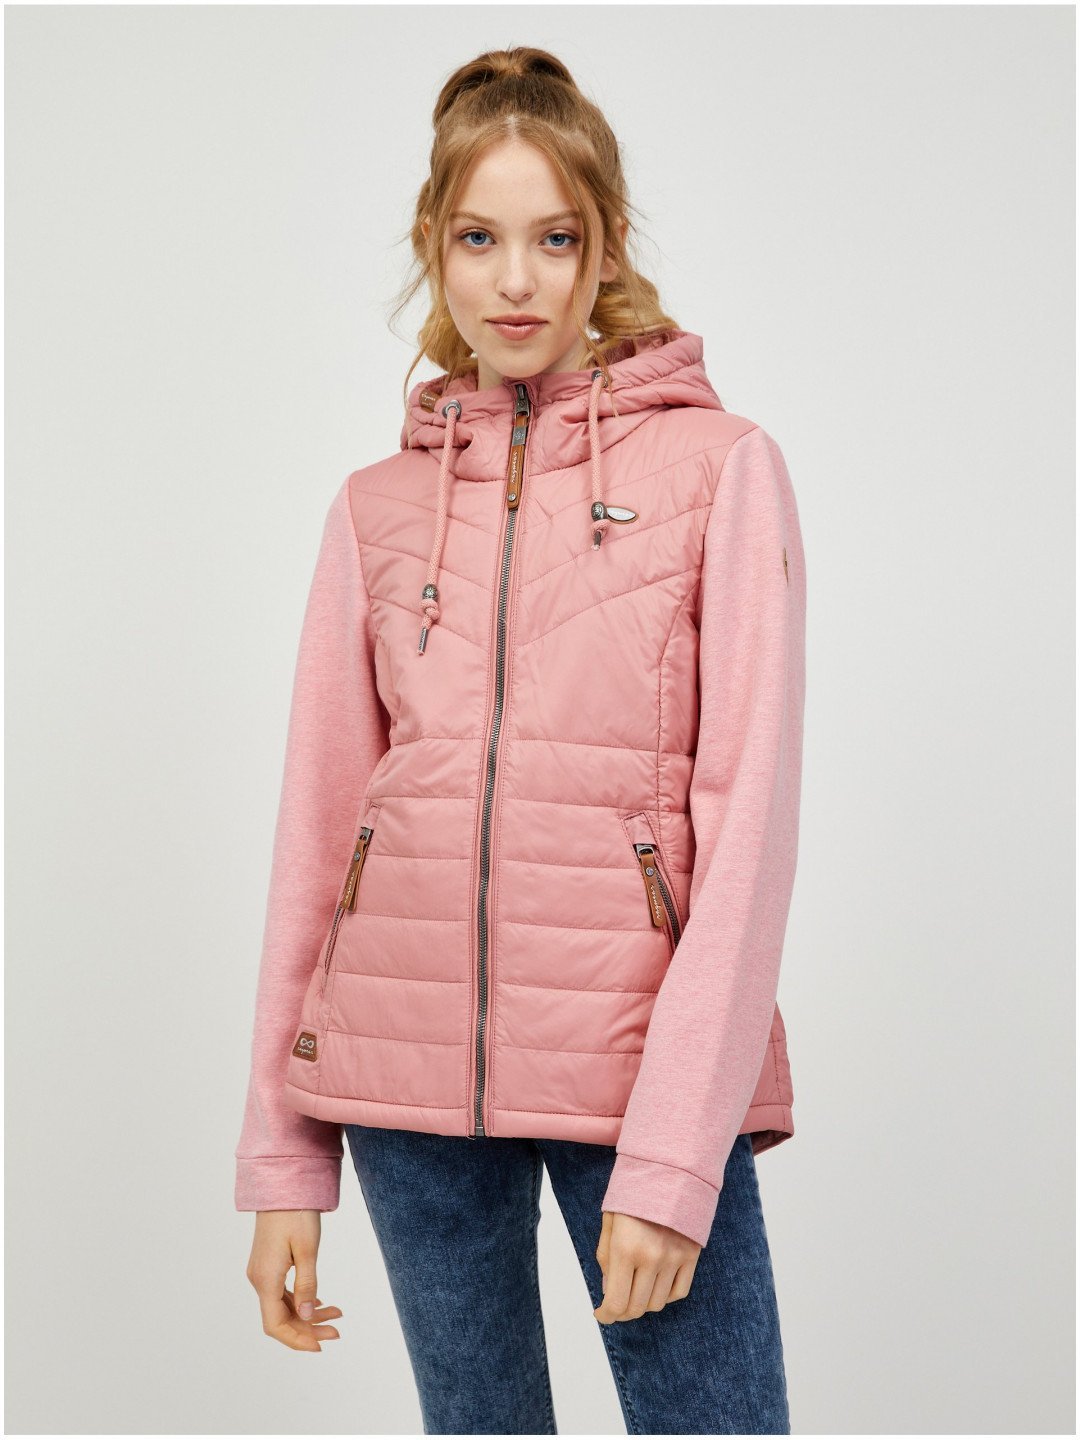 Růžová dámská prošívaná bunda s kapucí Ragwear Lucinda